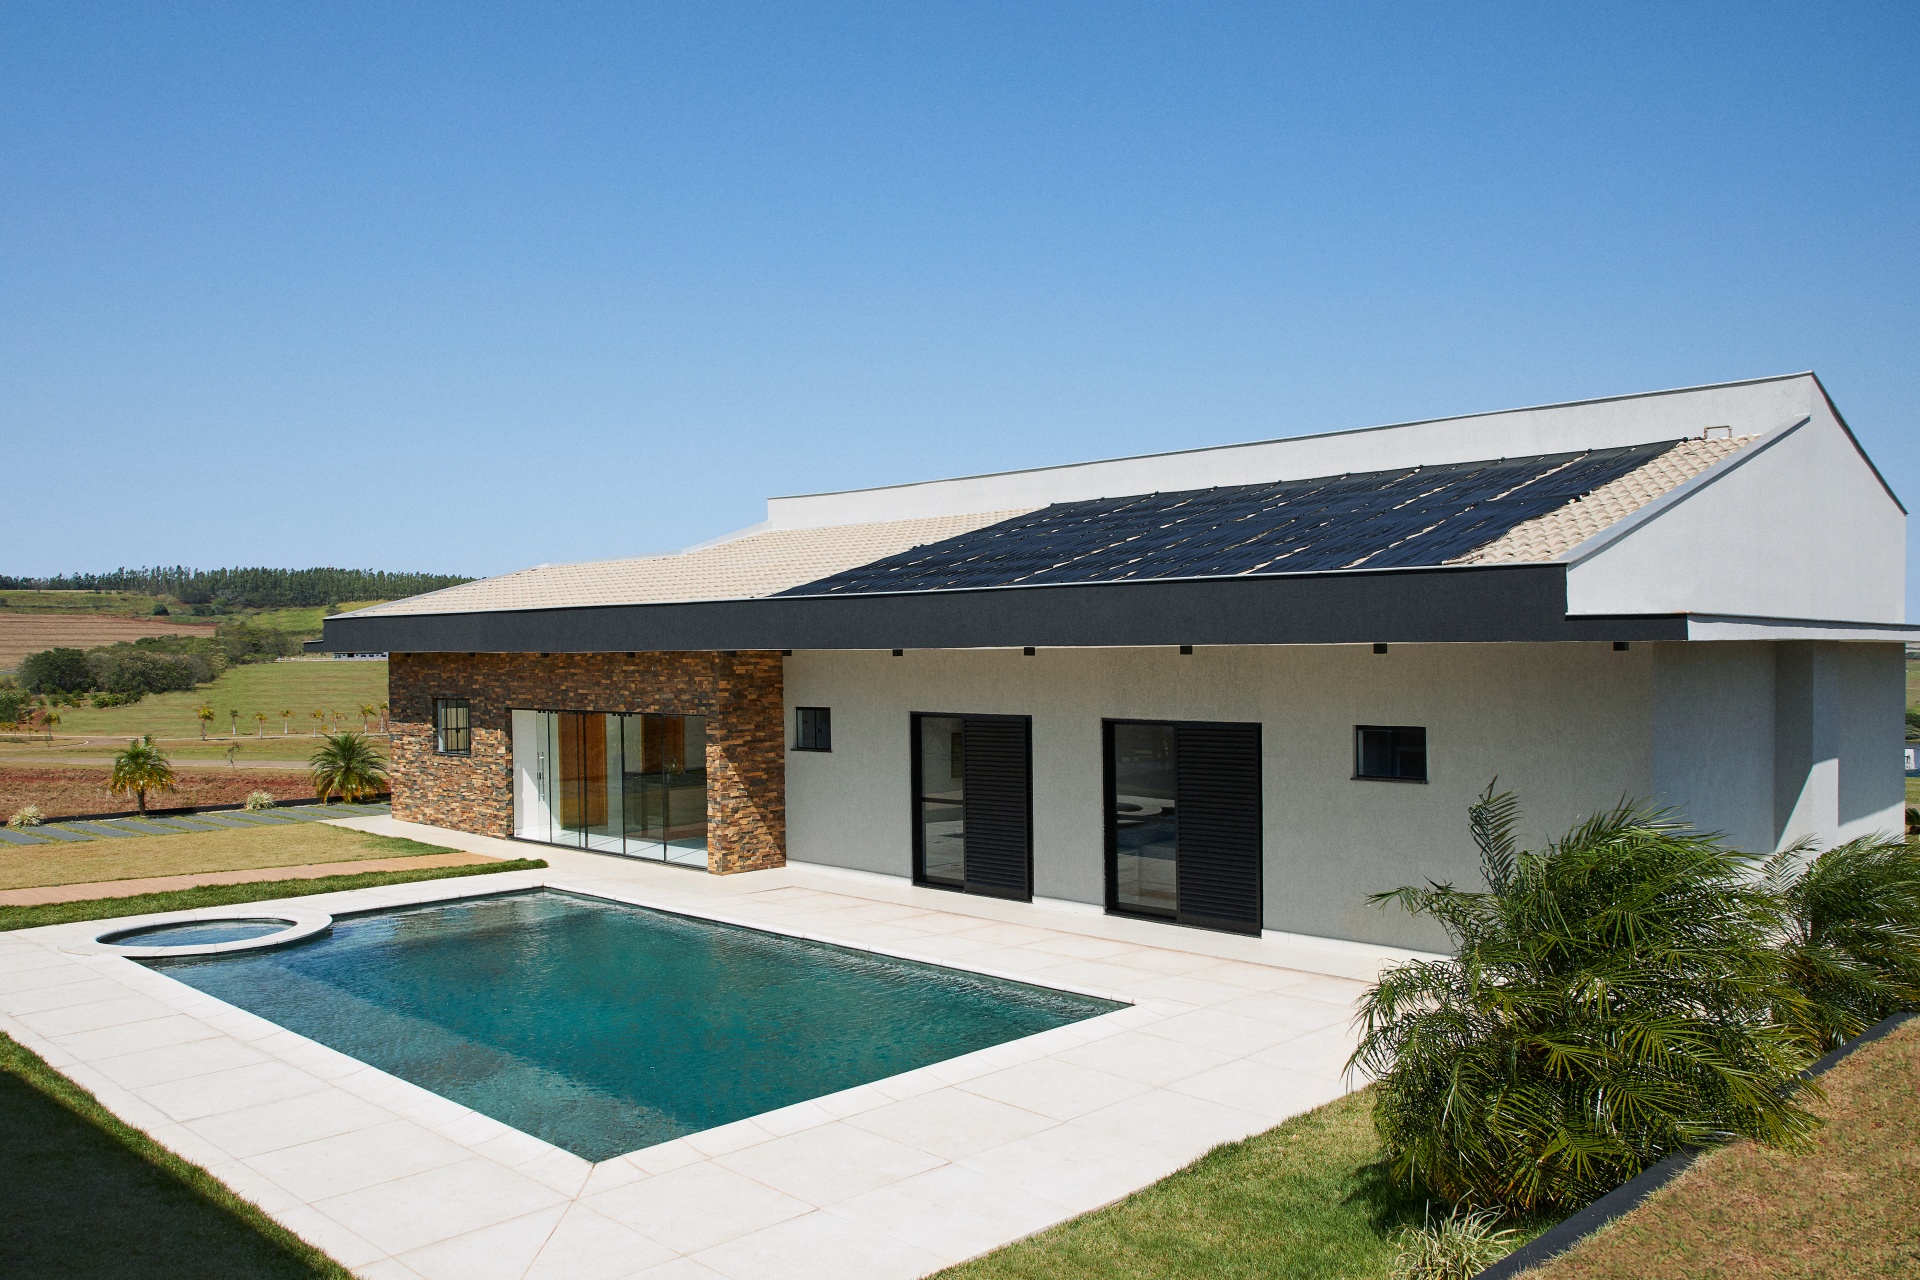 5 Reasons to buy VIBEA solar pool heaters!